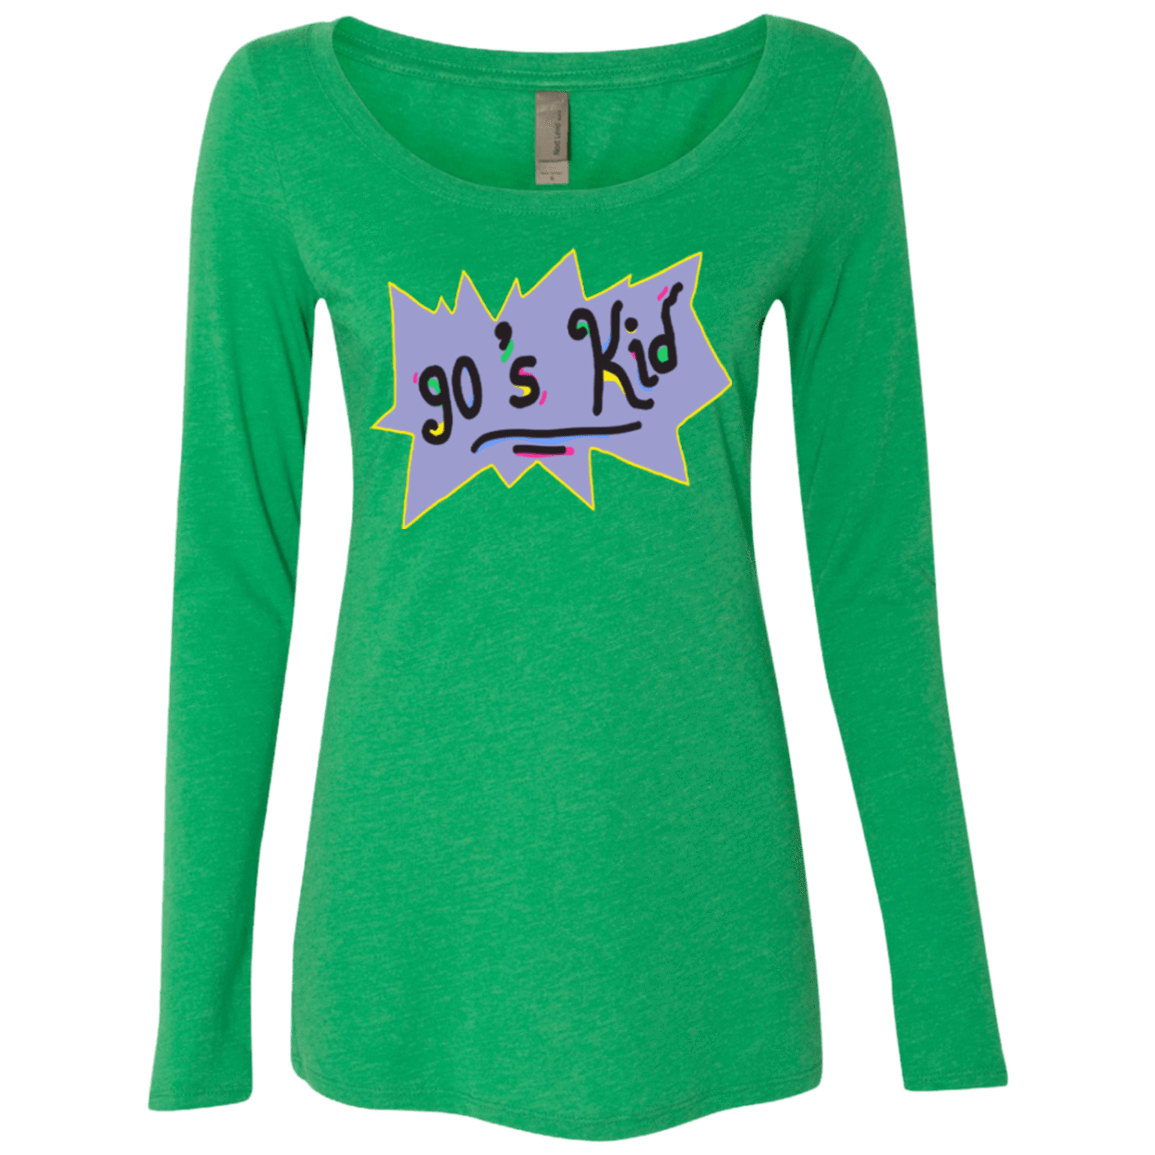 T-Shirts Envy / Small 90's Kid Women's Triblend Long Sleeve Shirt